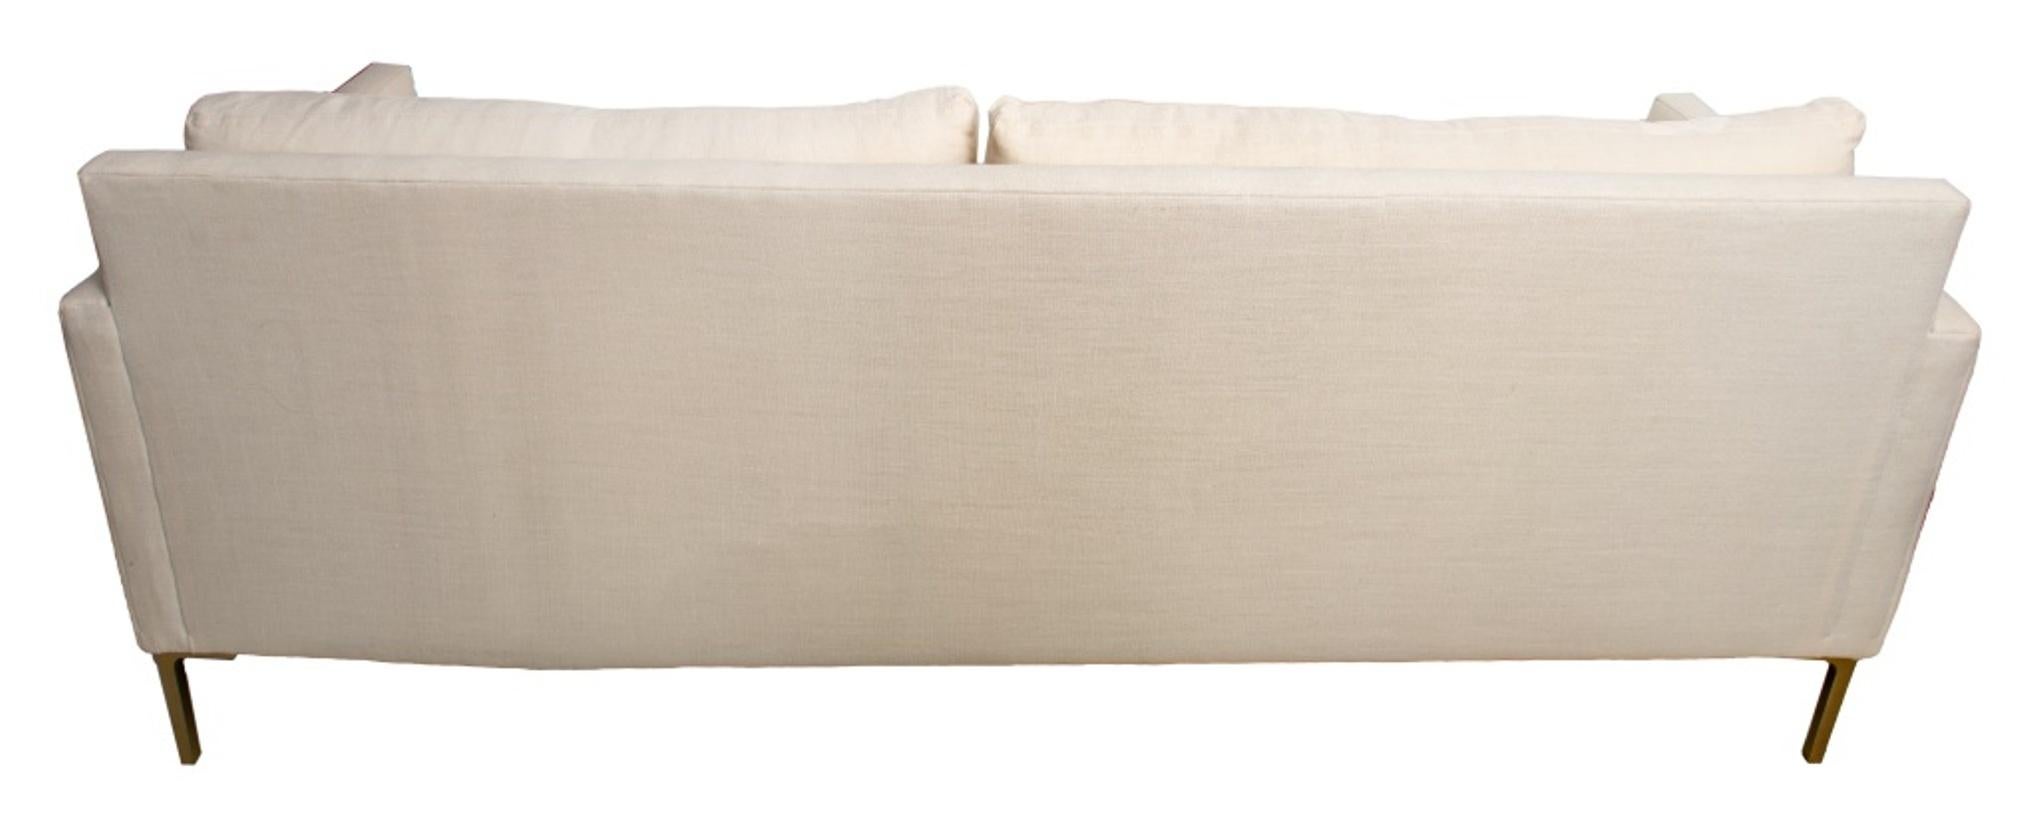 Knoll Mid-Century Modern Style Sofa For Sale 3